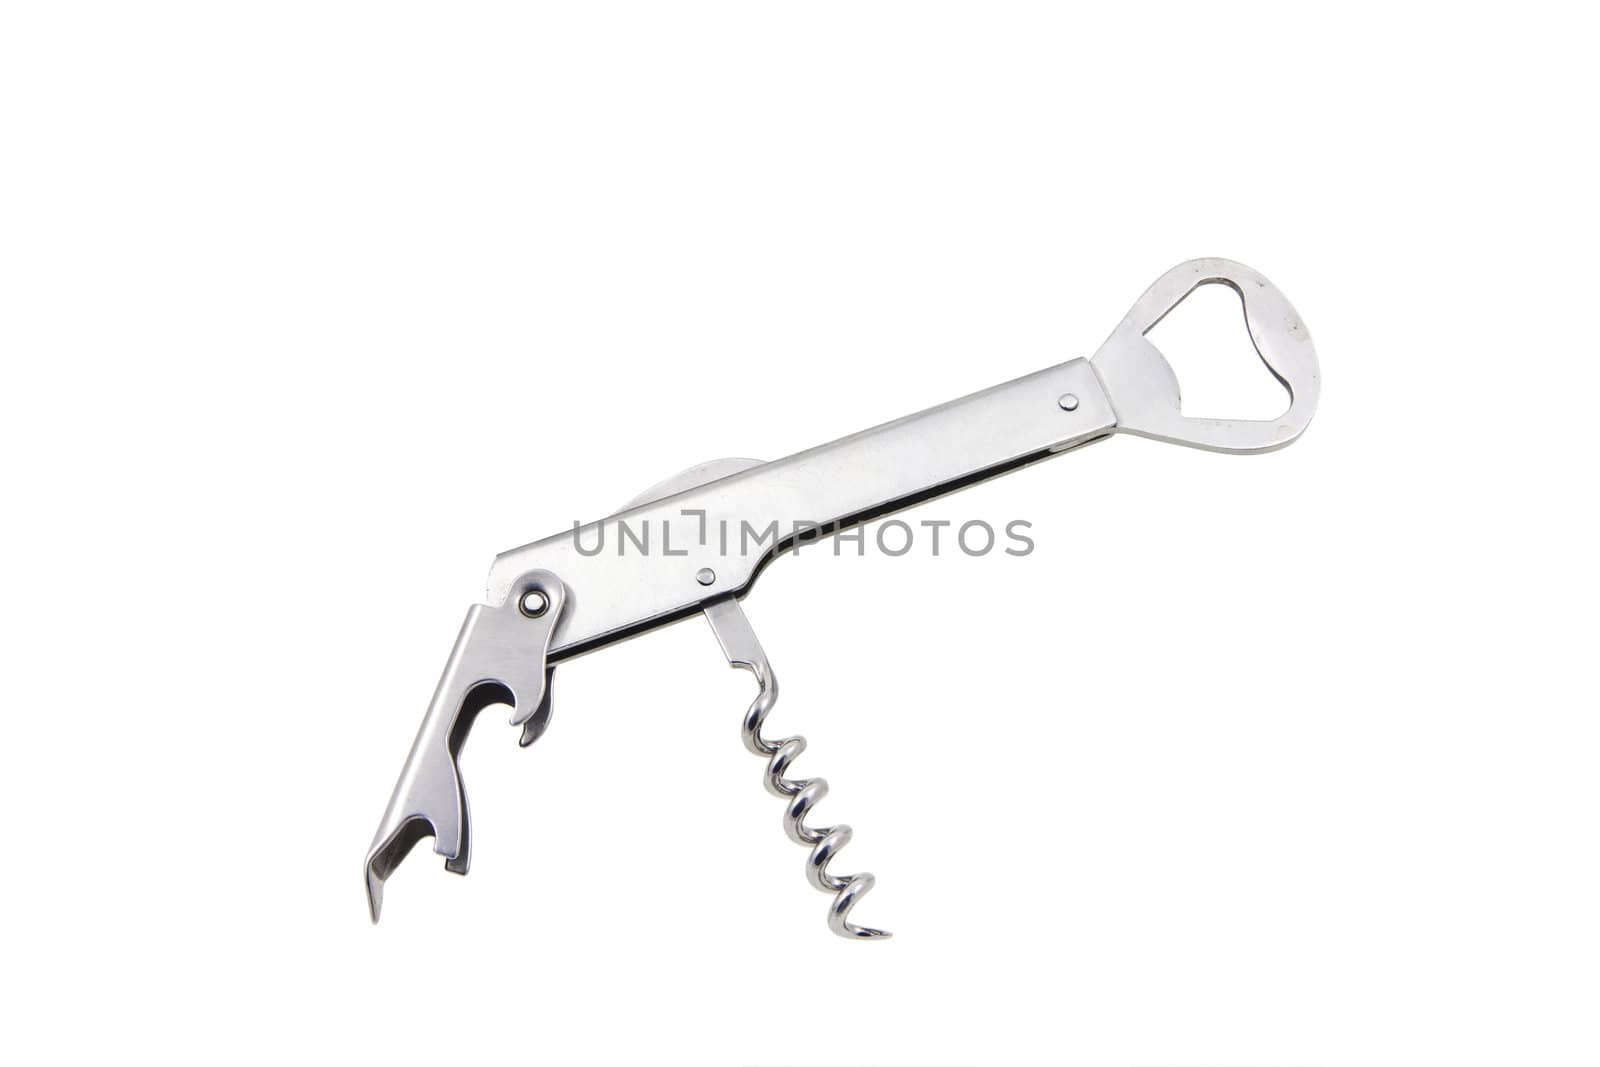 Metal corkscrew on white background by huntz